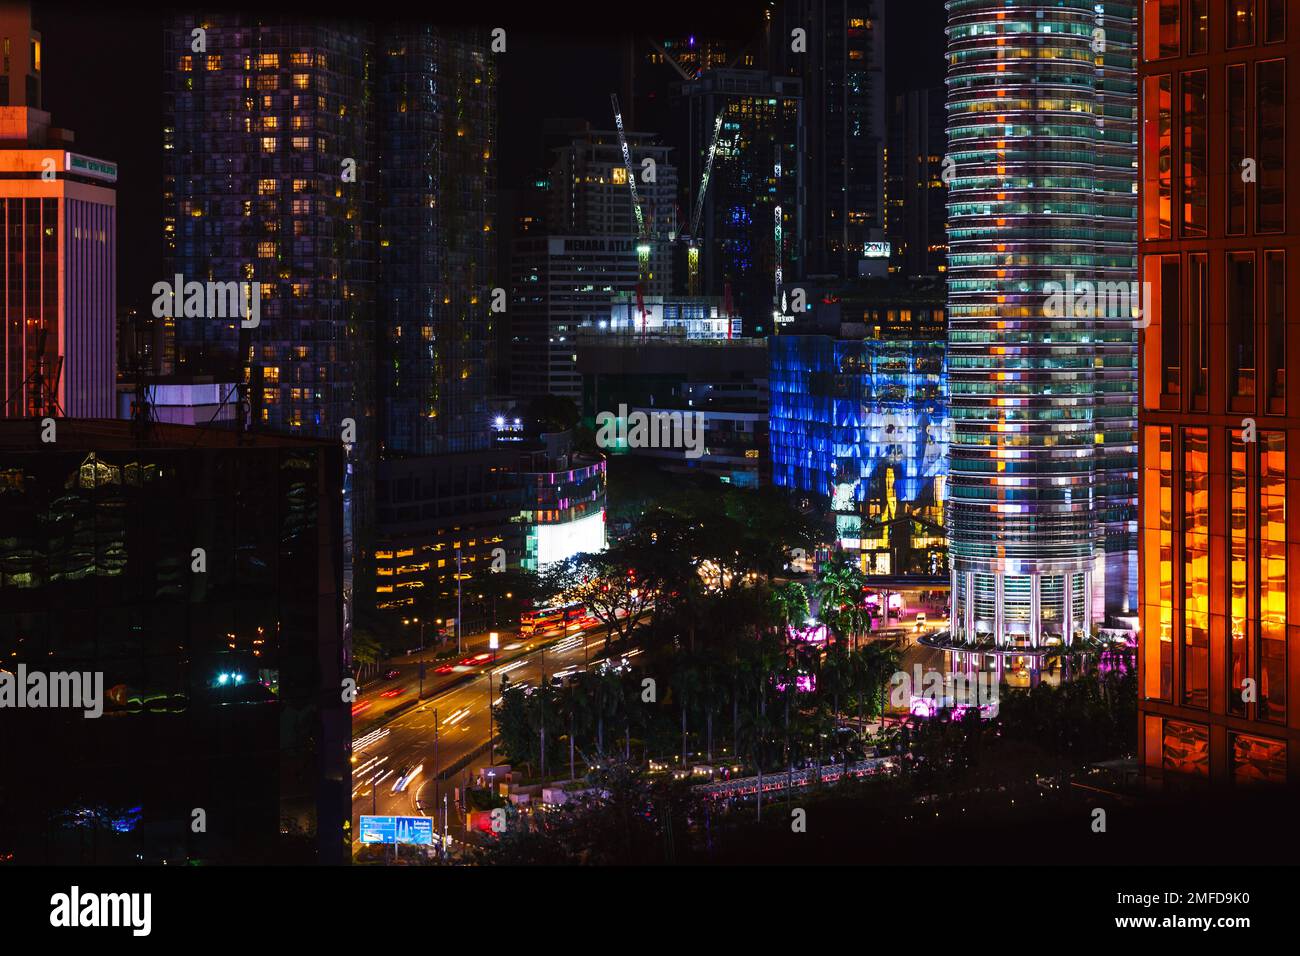 Kuala Lumpur, Malaysia - November 28, 2019: Kuala Lumpur downtown at night, modern high rise buildings with colorful illumination Stock Photo